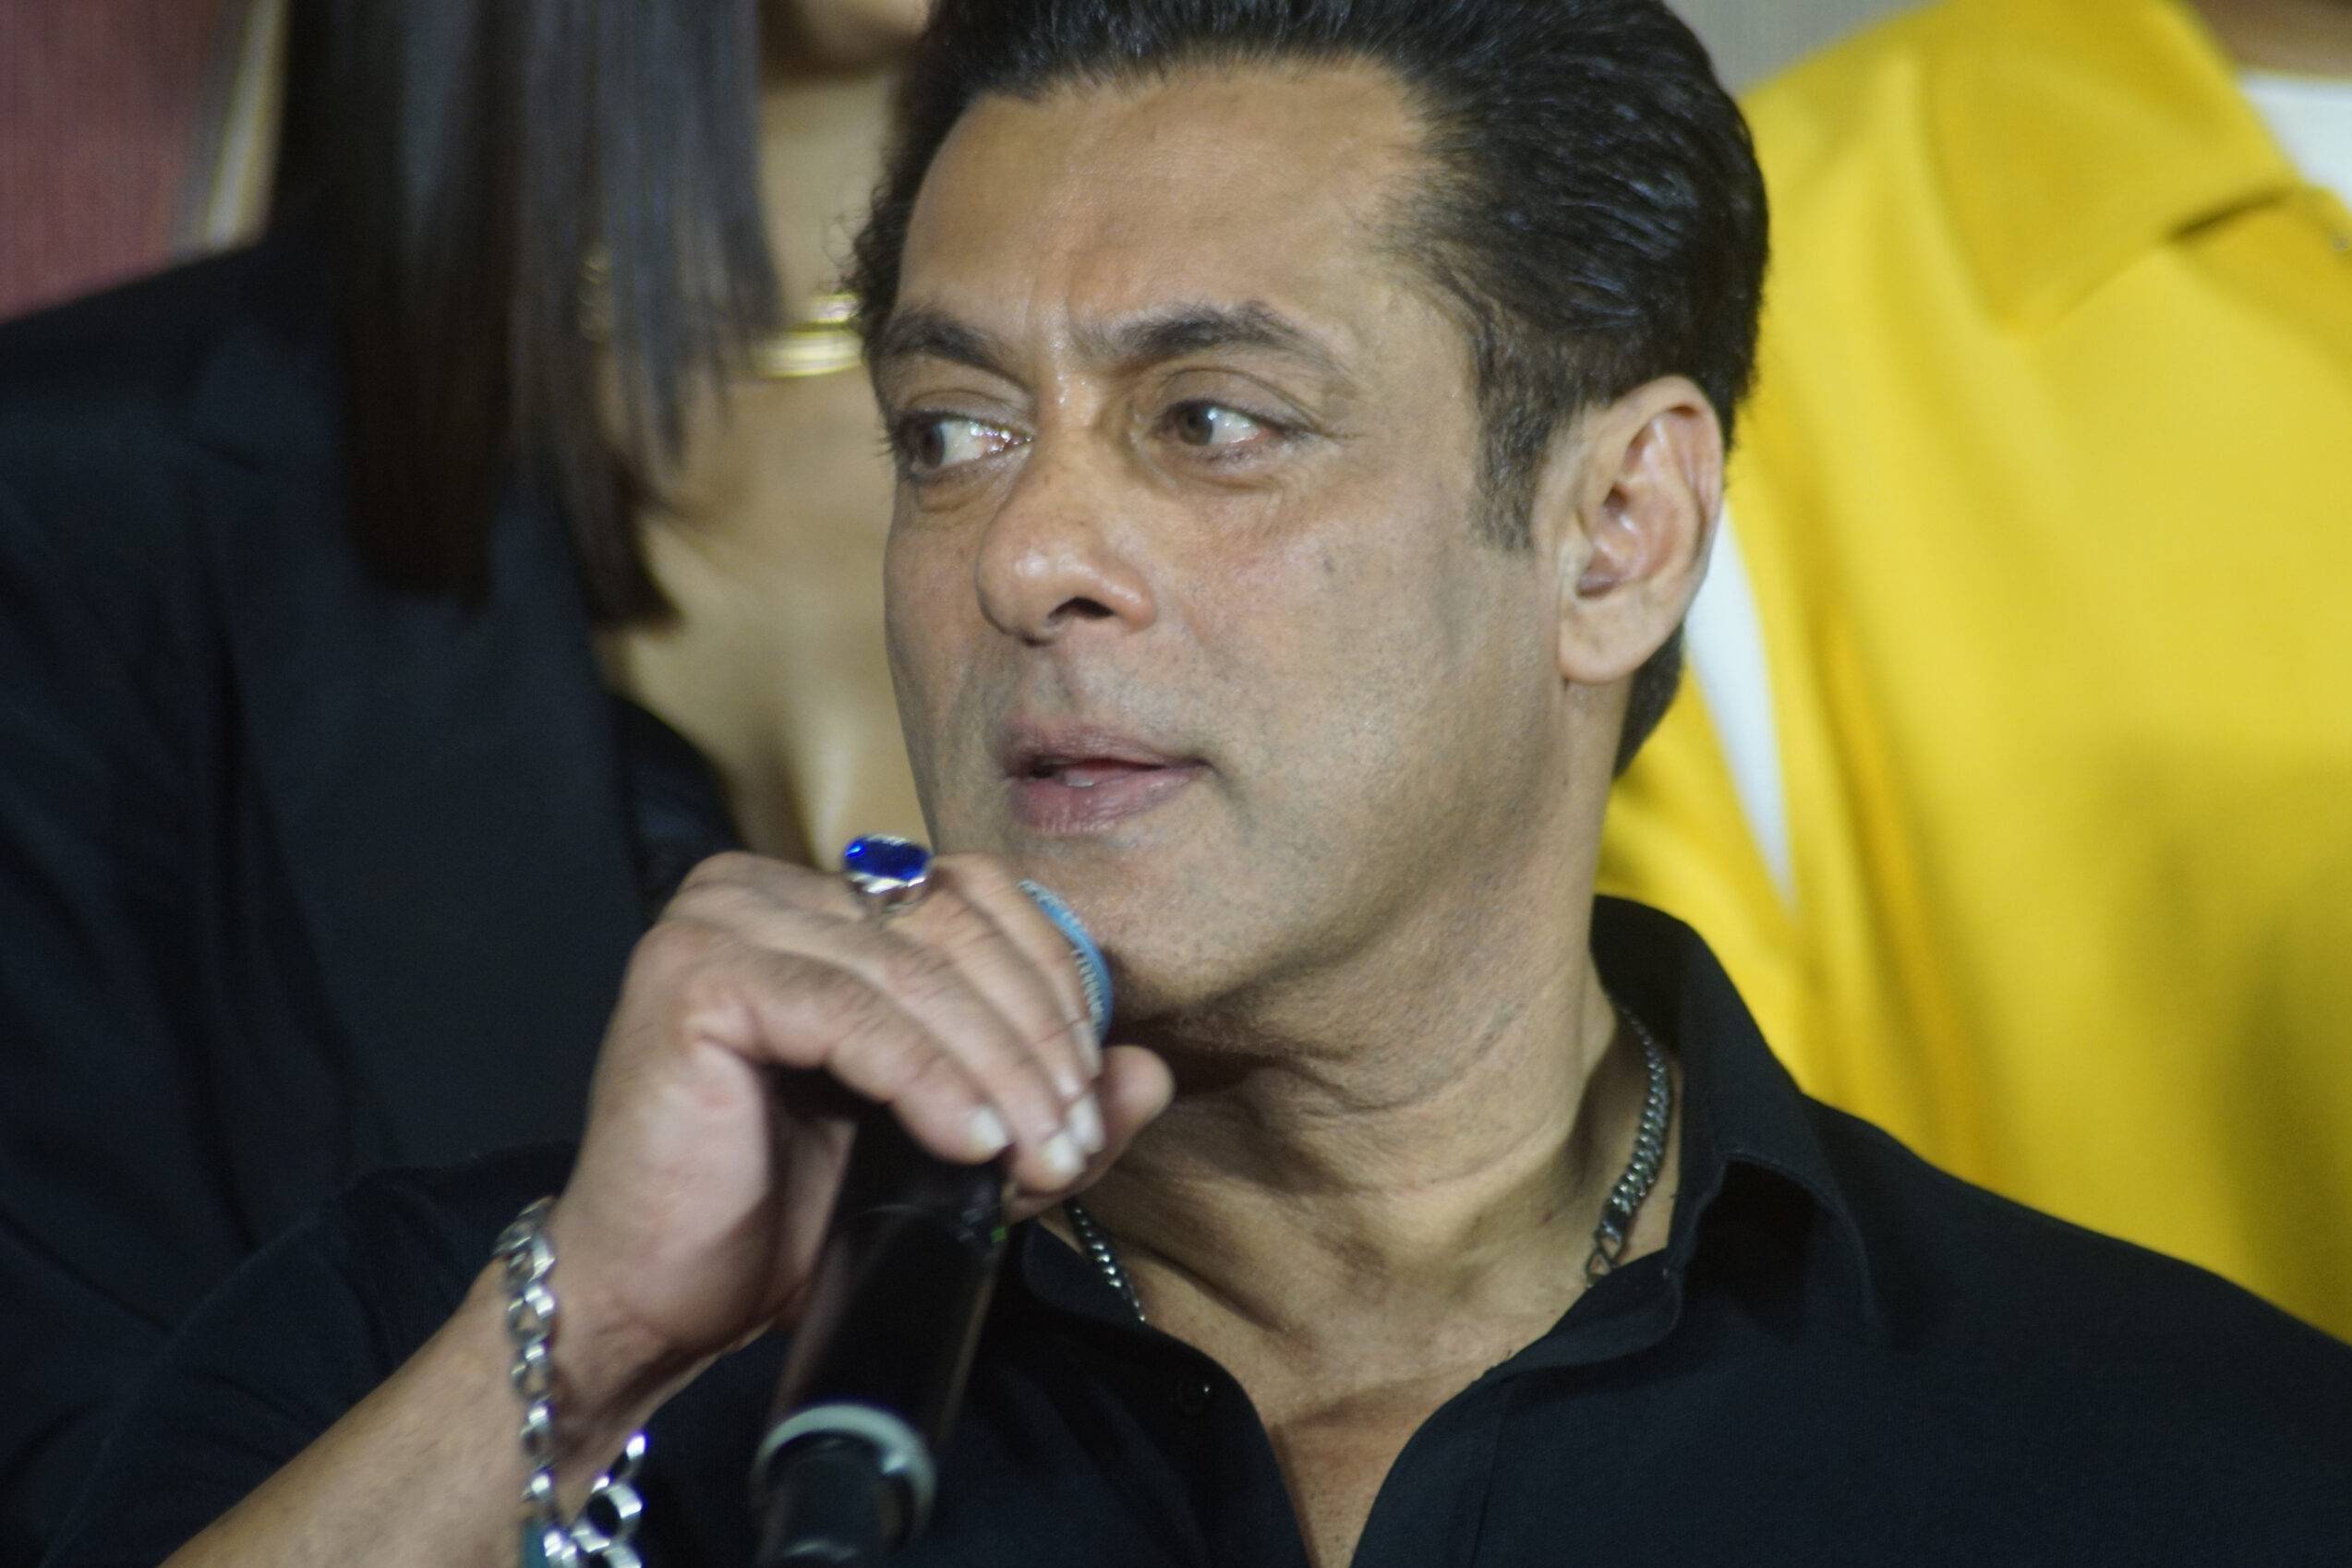 Salman Khan attends the trailer launch of film 'Kisi Ka Bhai Kisi Ki Jaan' on Aprill 10, 2023 in Mumbai, India [Photo by Prodip Guha/Getty Images]